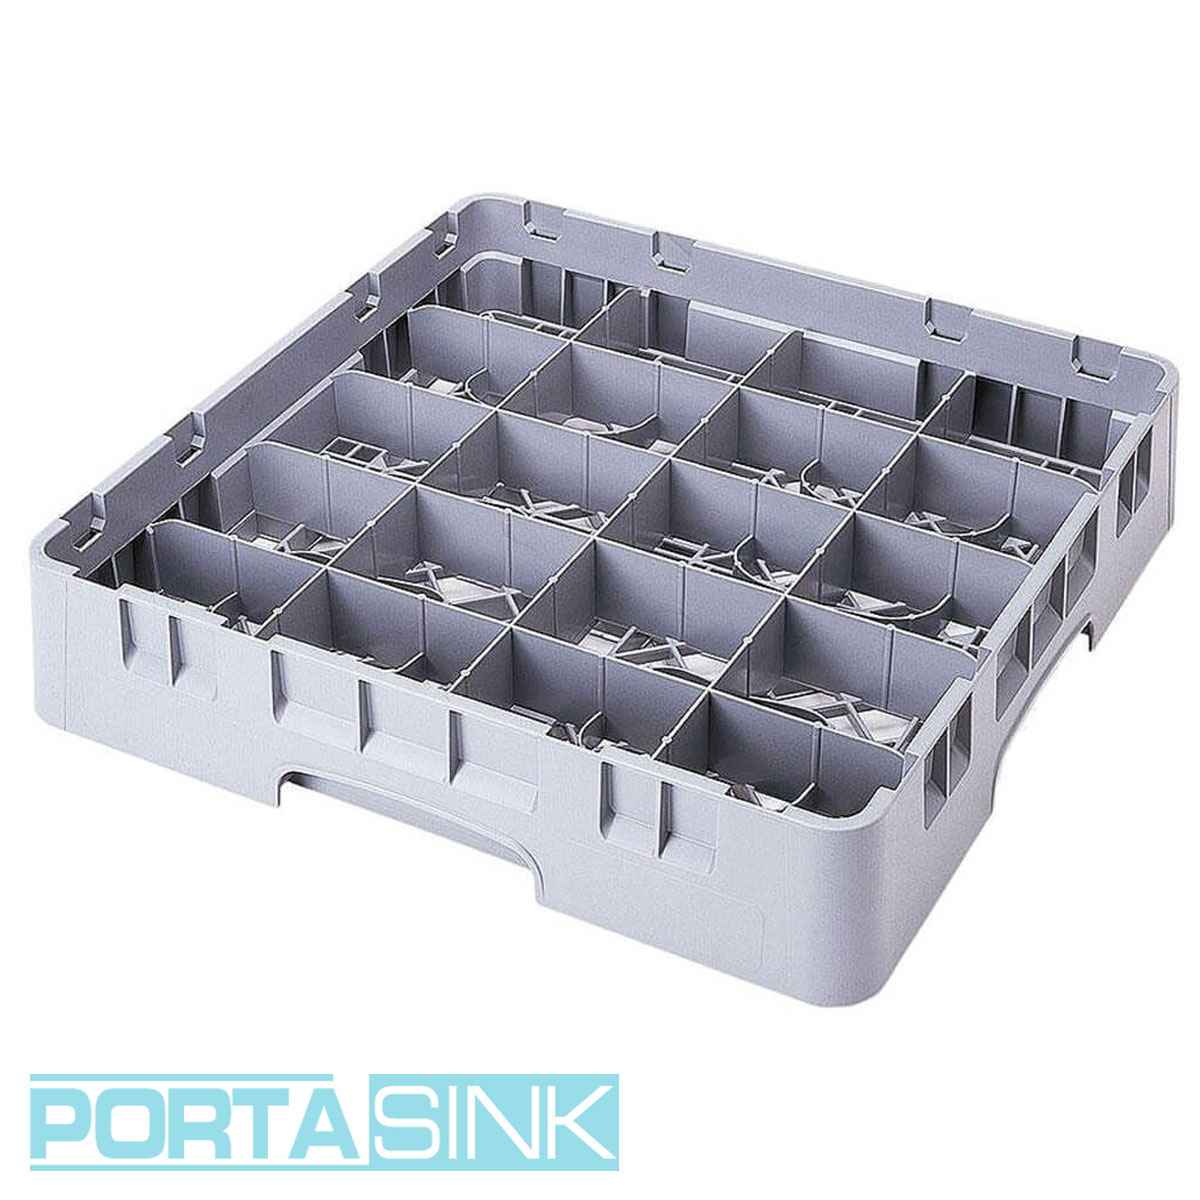 https://www.porta-sink.com/wp-content/uploads/2018/12/cambro-dishwasher-rack-20-compartment-01.jpg